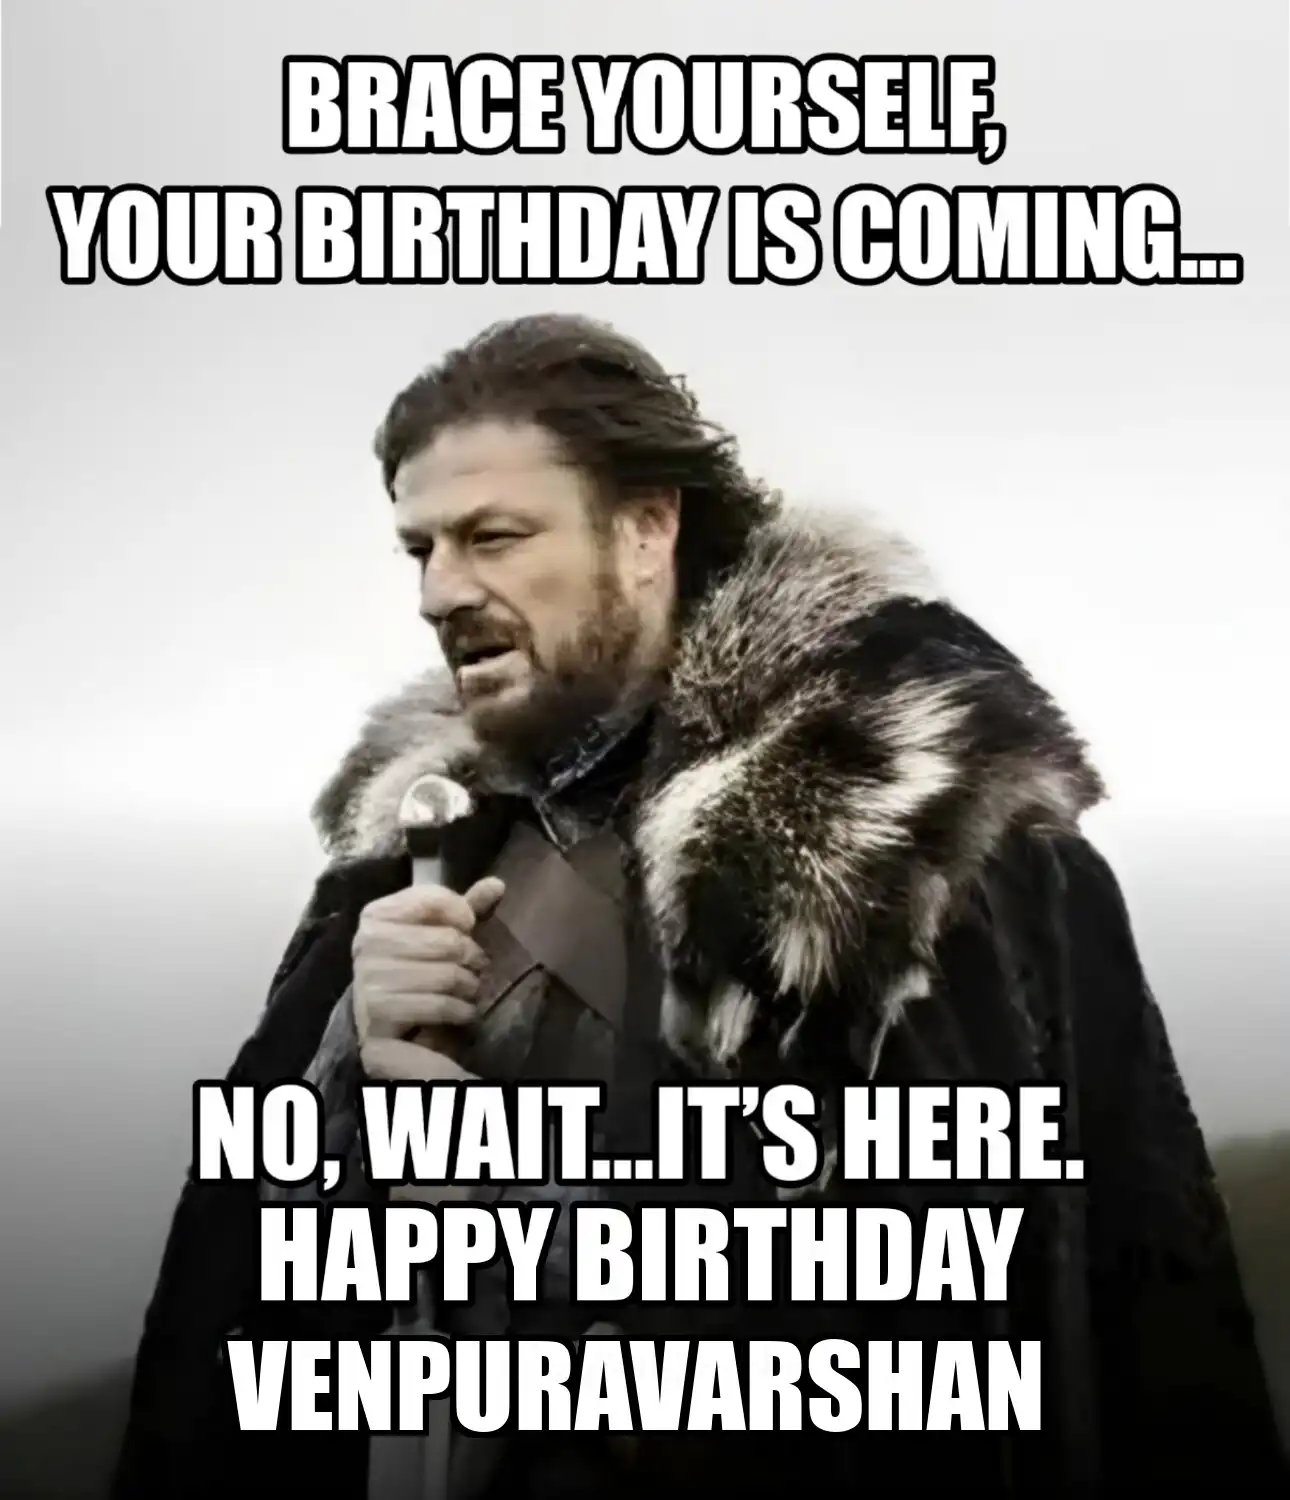 Happy Birthday Venpuravarshan Brace Yourself Your Birthday Is Coming Meme